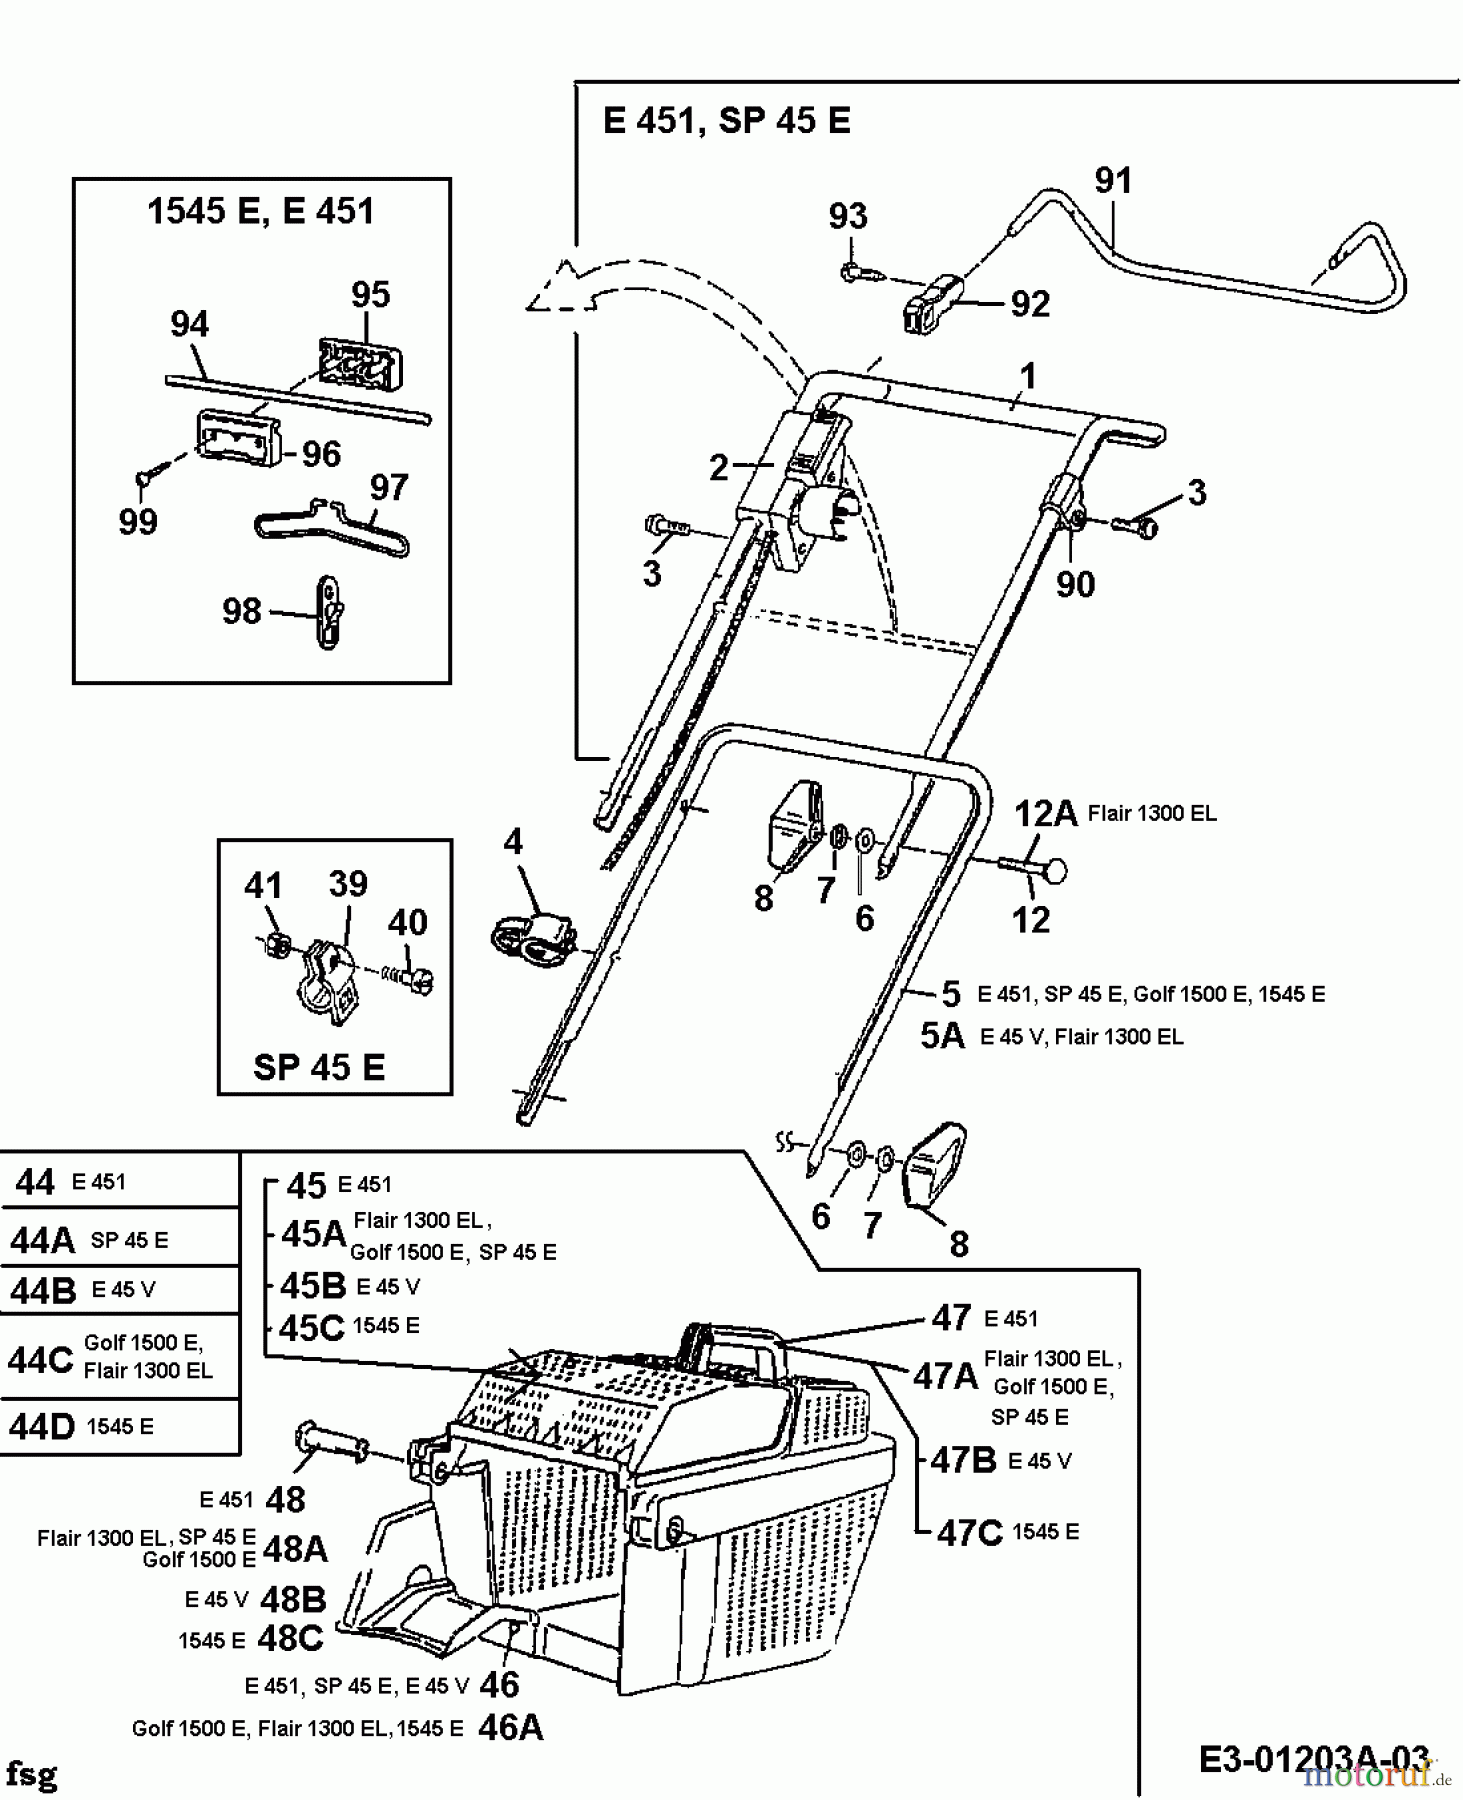  Fleurelle Electric mower E 451 18A-T2H-619  (1998) Grass box, Handle